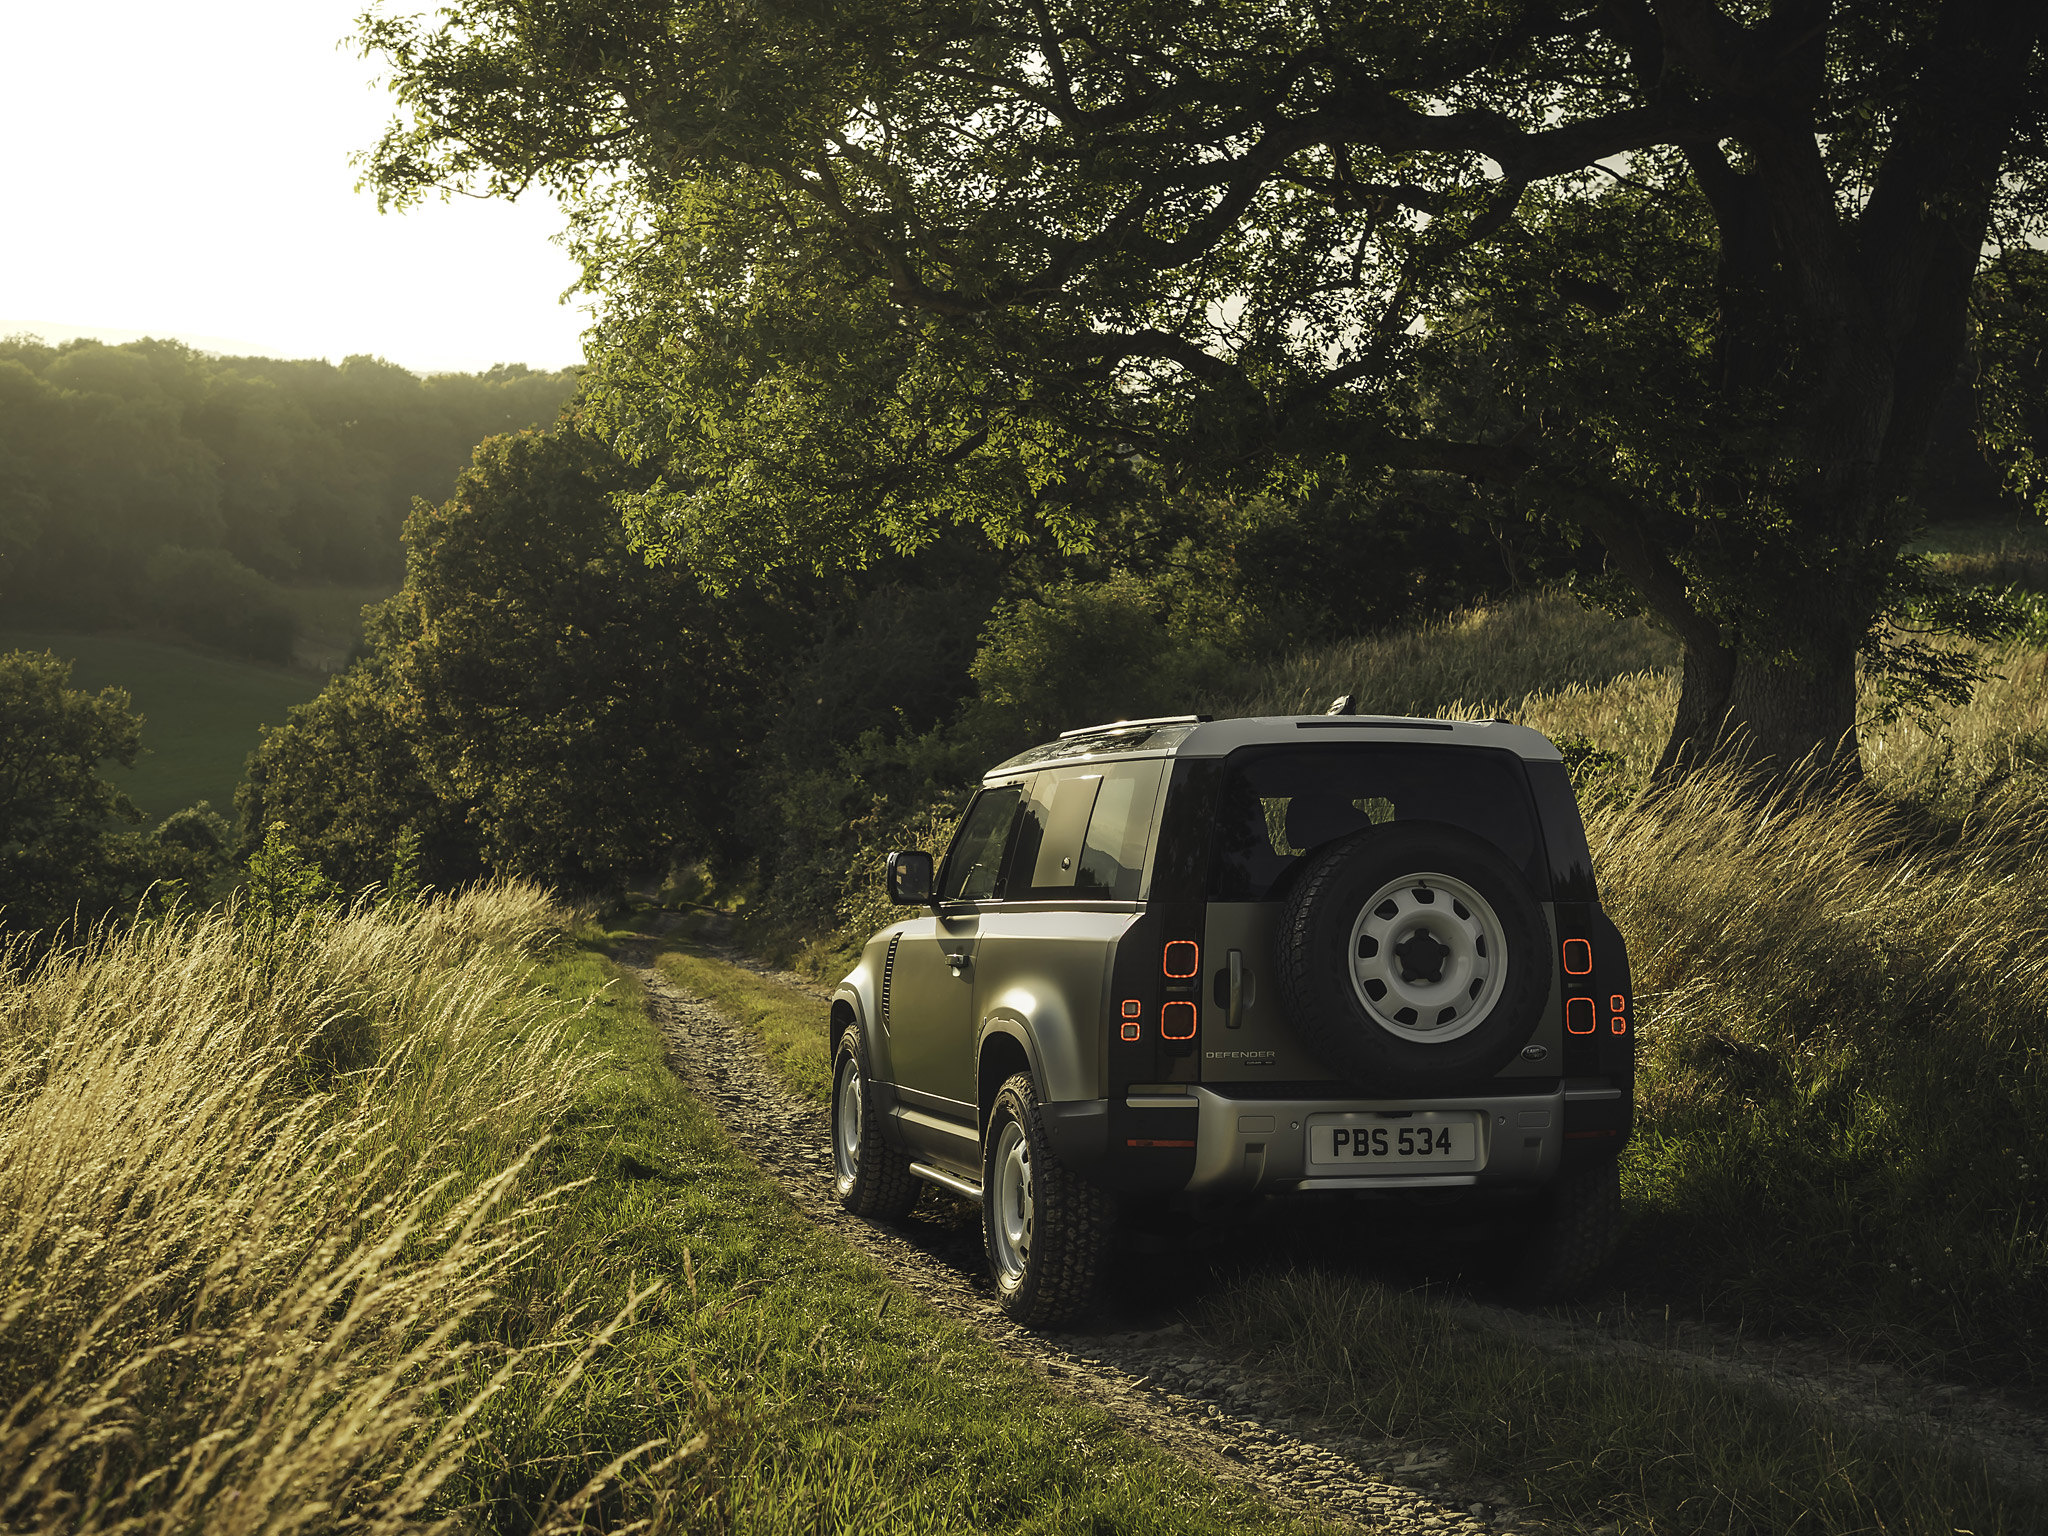  2020 Land Rover Defender Wallpaper.